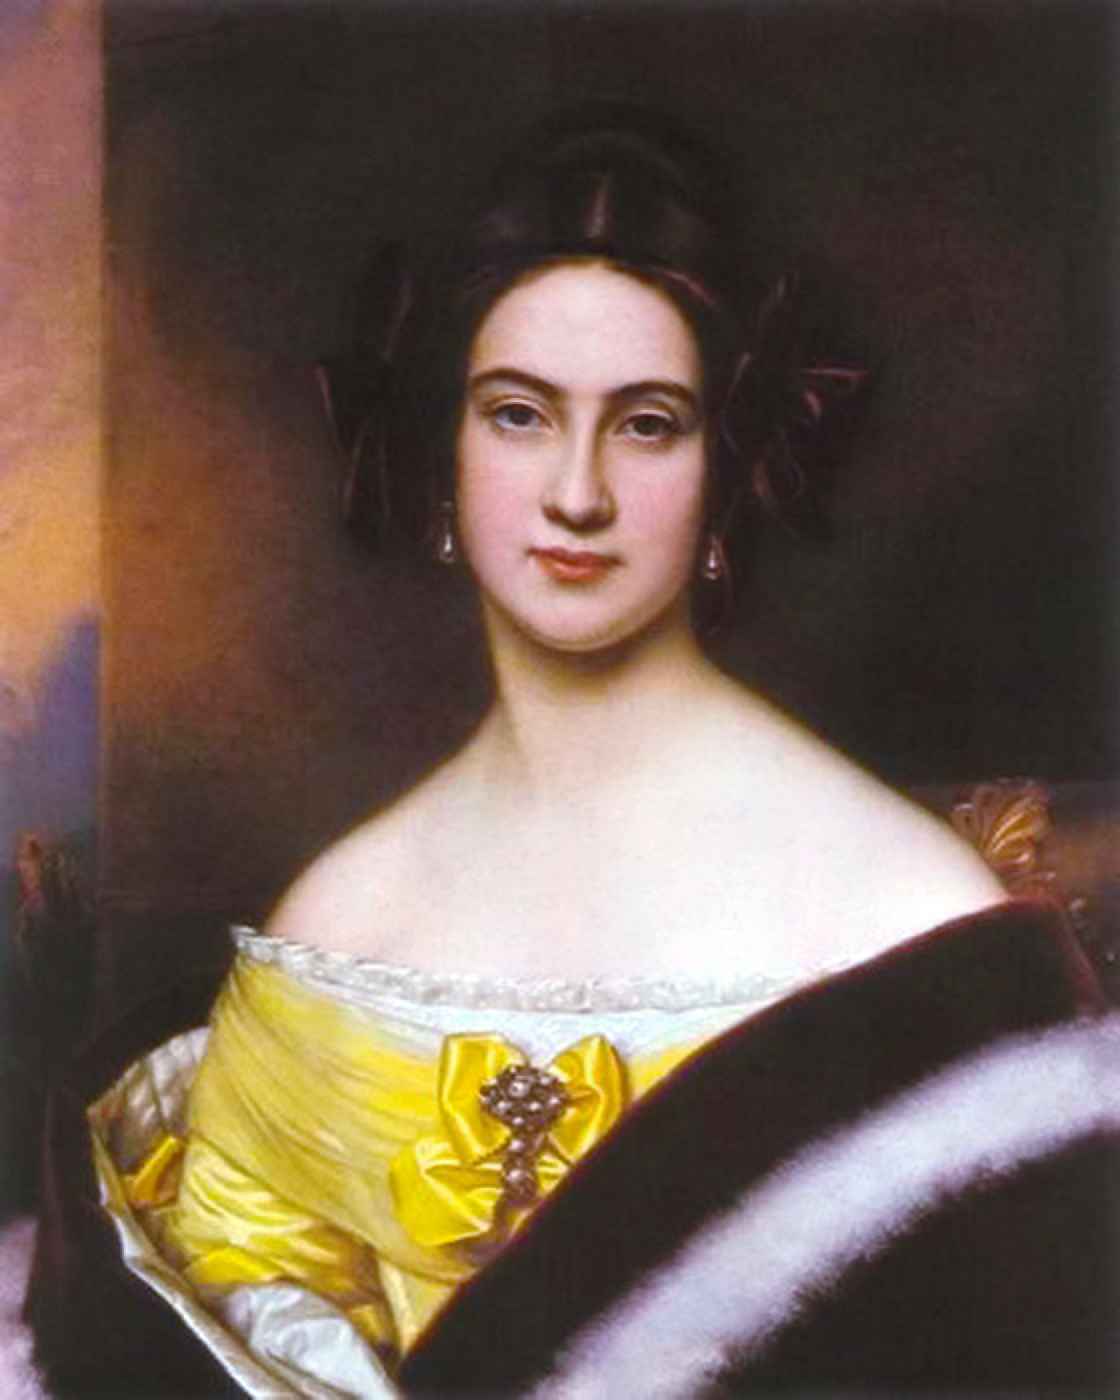 Historiker Mexico At sige sandheden File:Mathilde von Jordan (Stieler).jpg - Wikimedia Commons